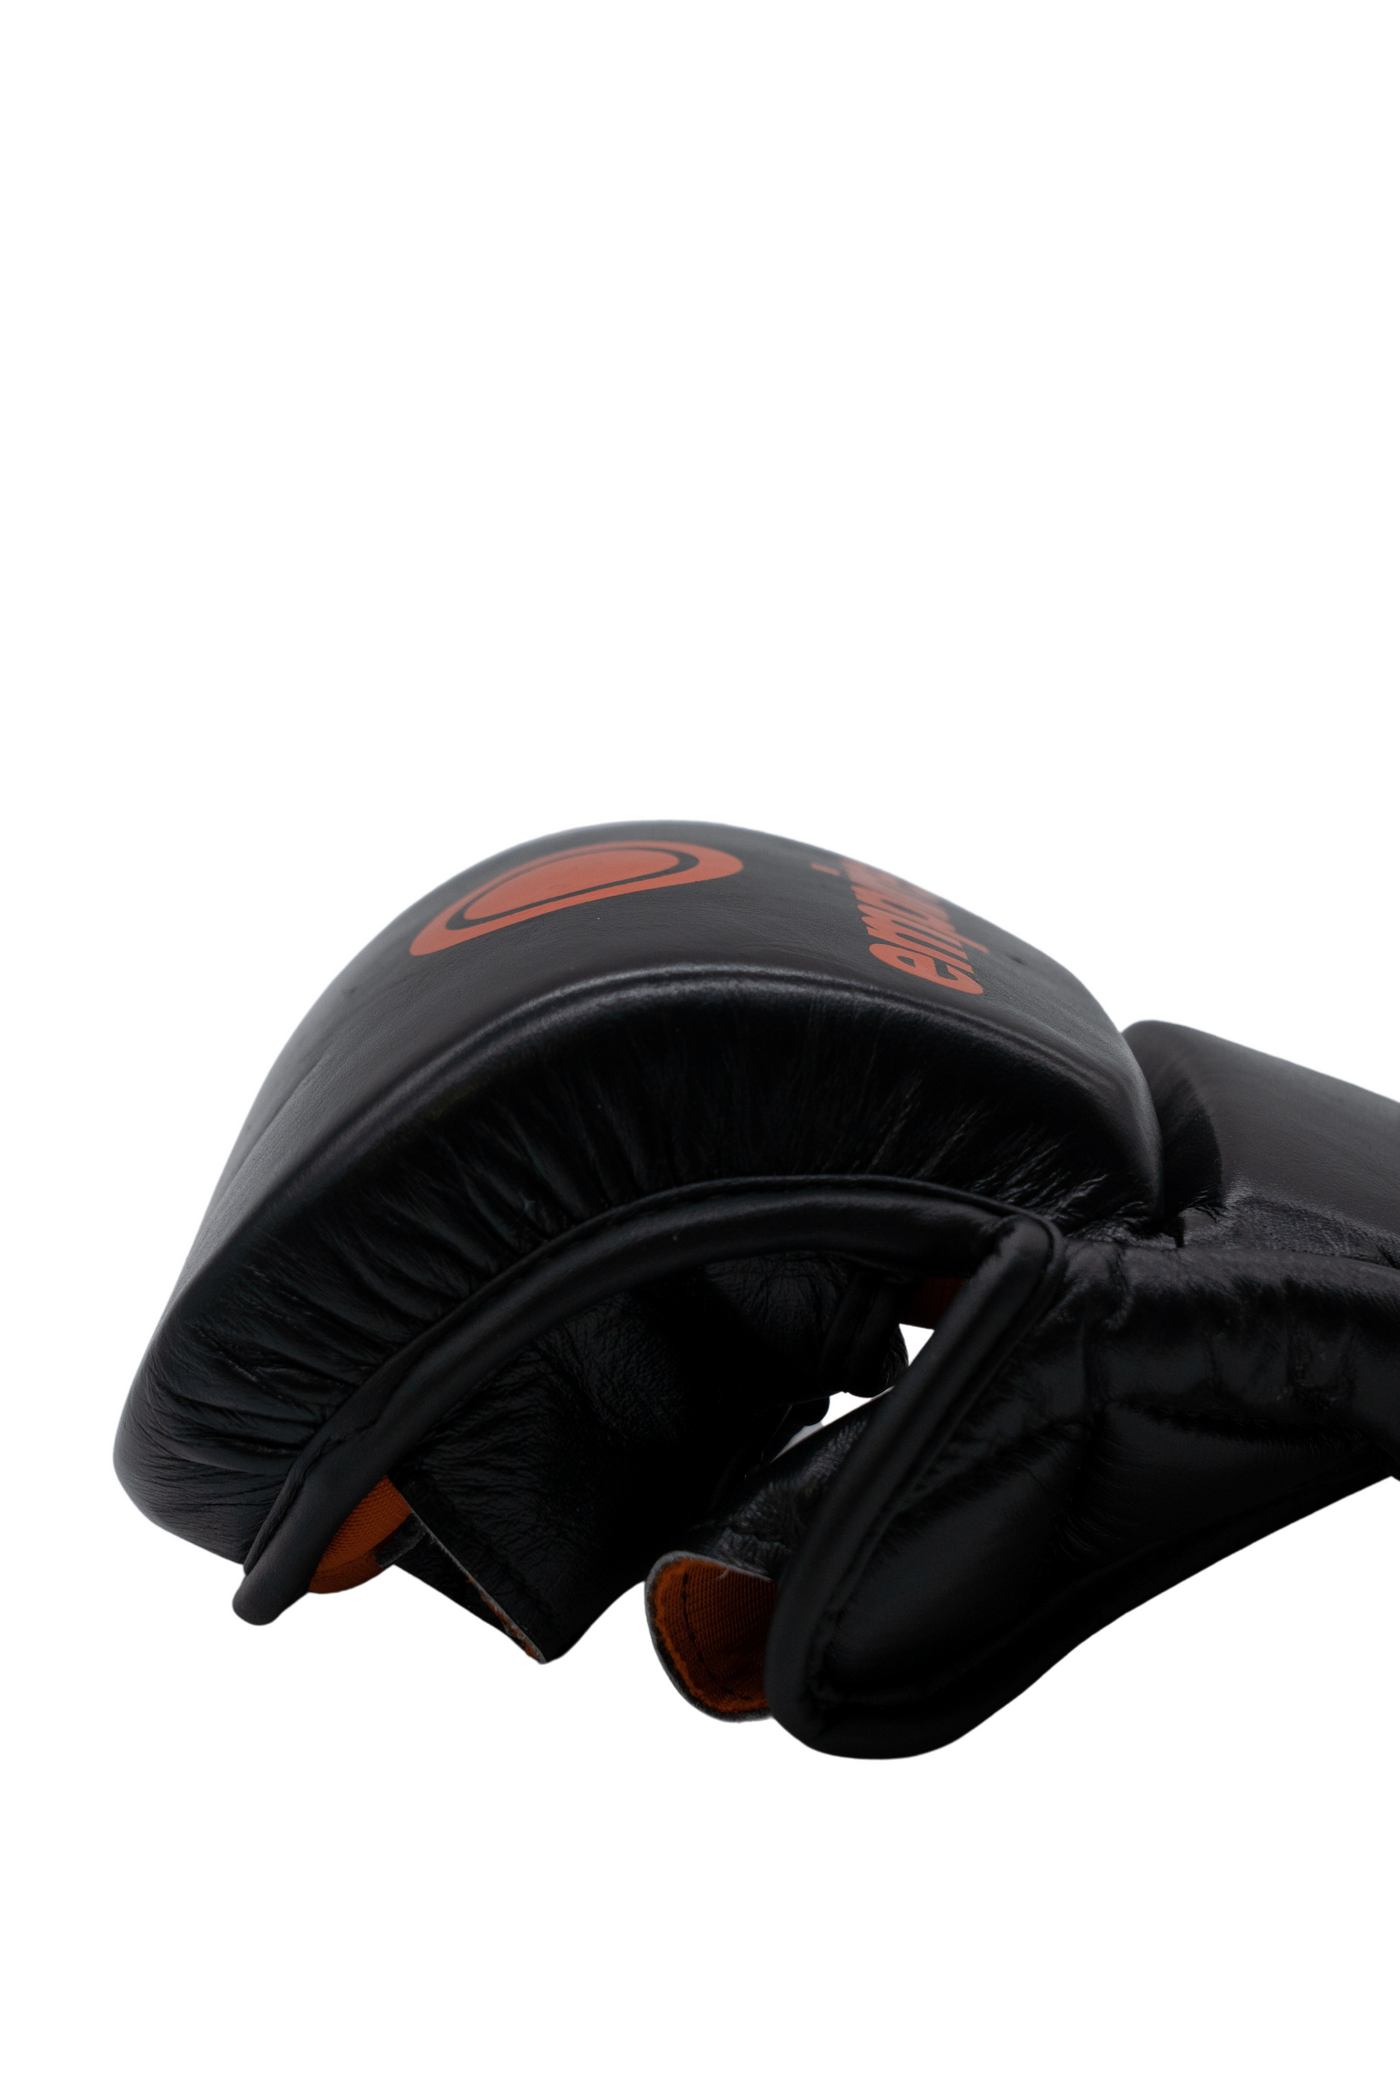 Amateur MMA Gloves